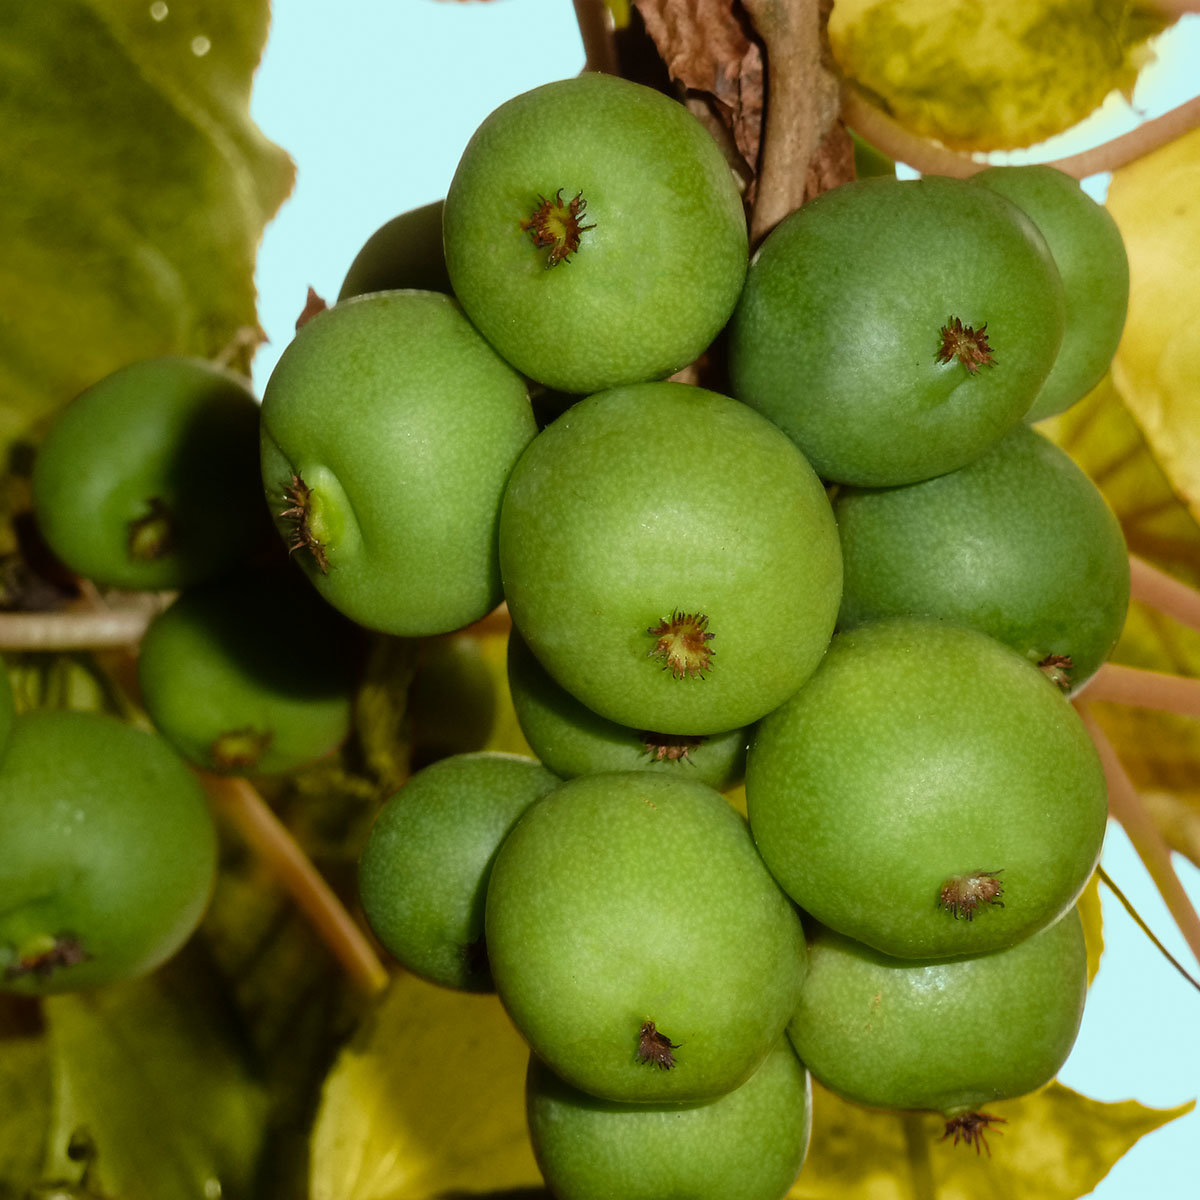 Apfel Kiwi Bowle — Rezepte Suchen